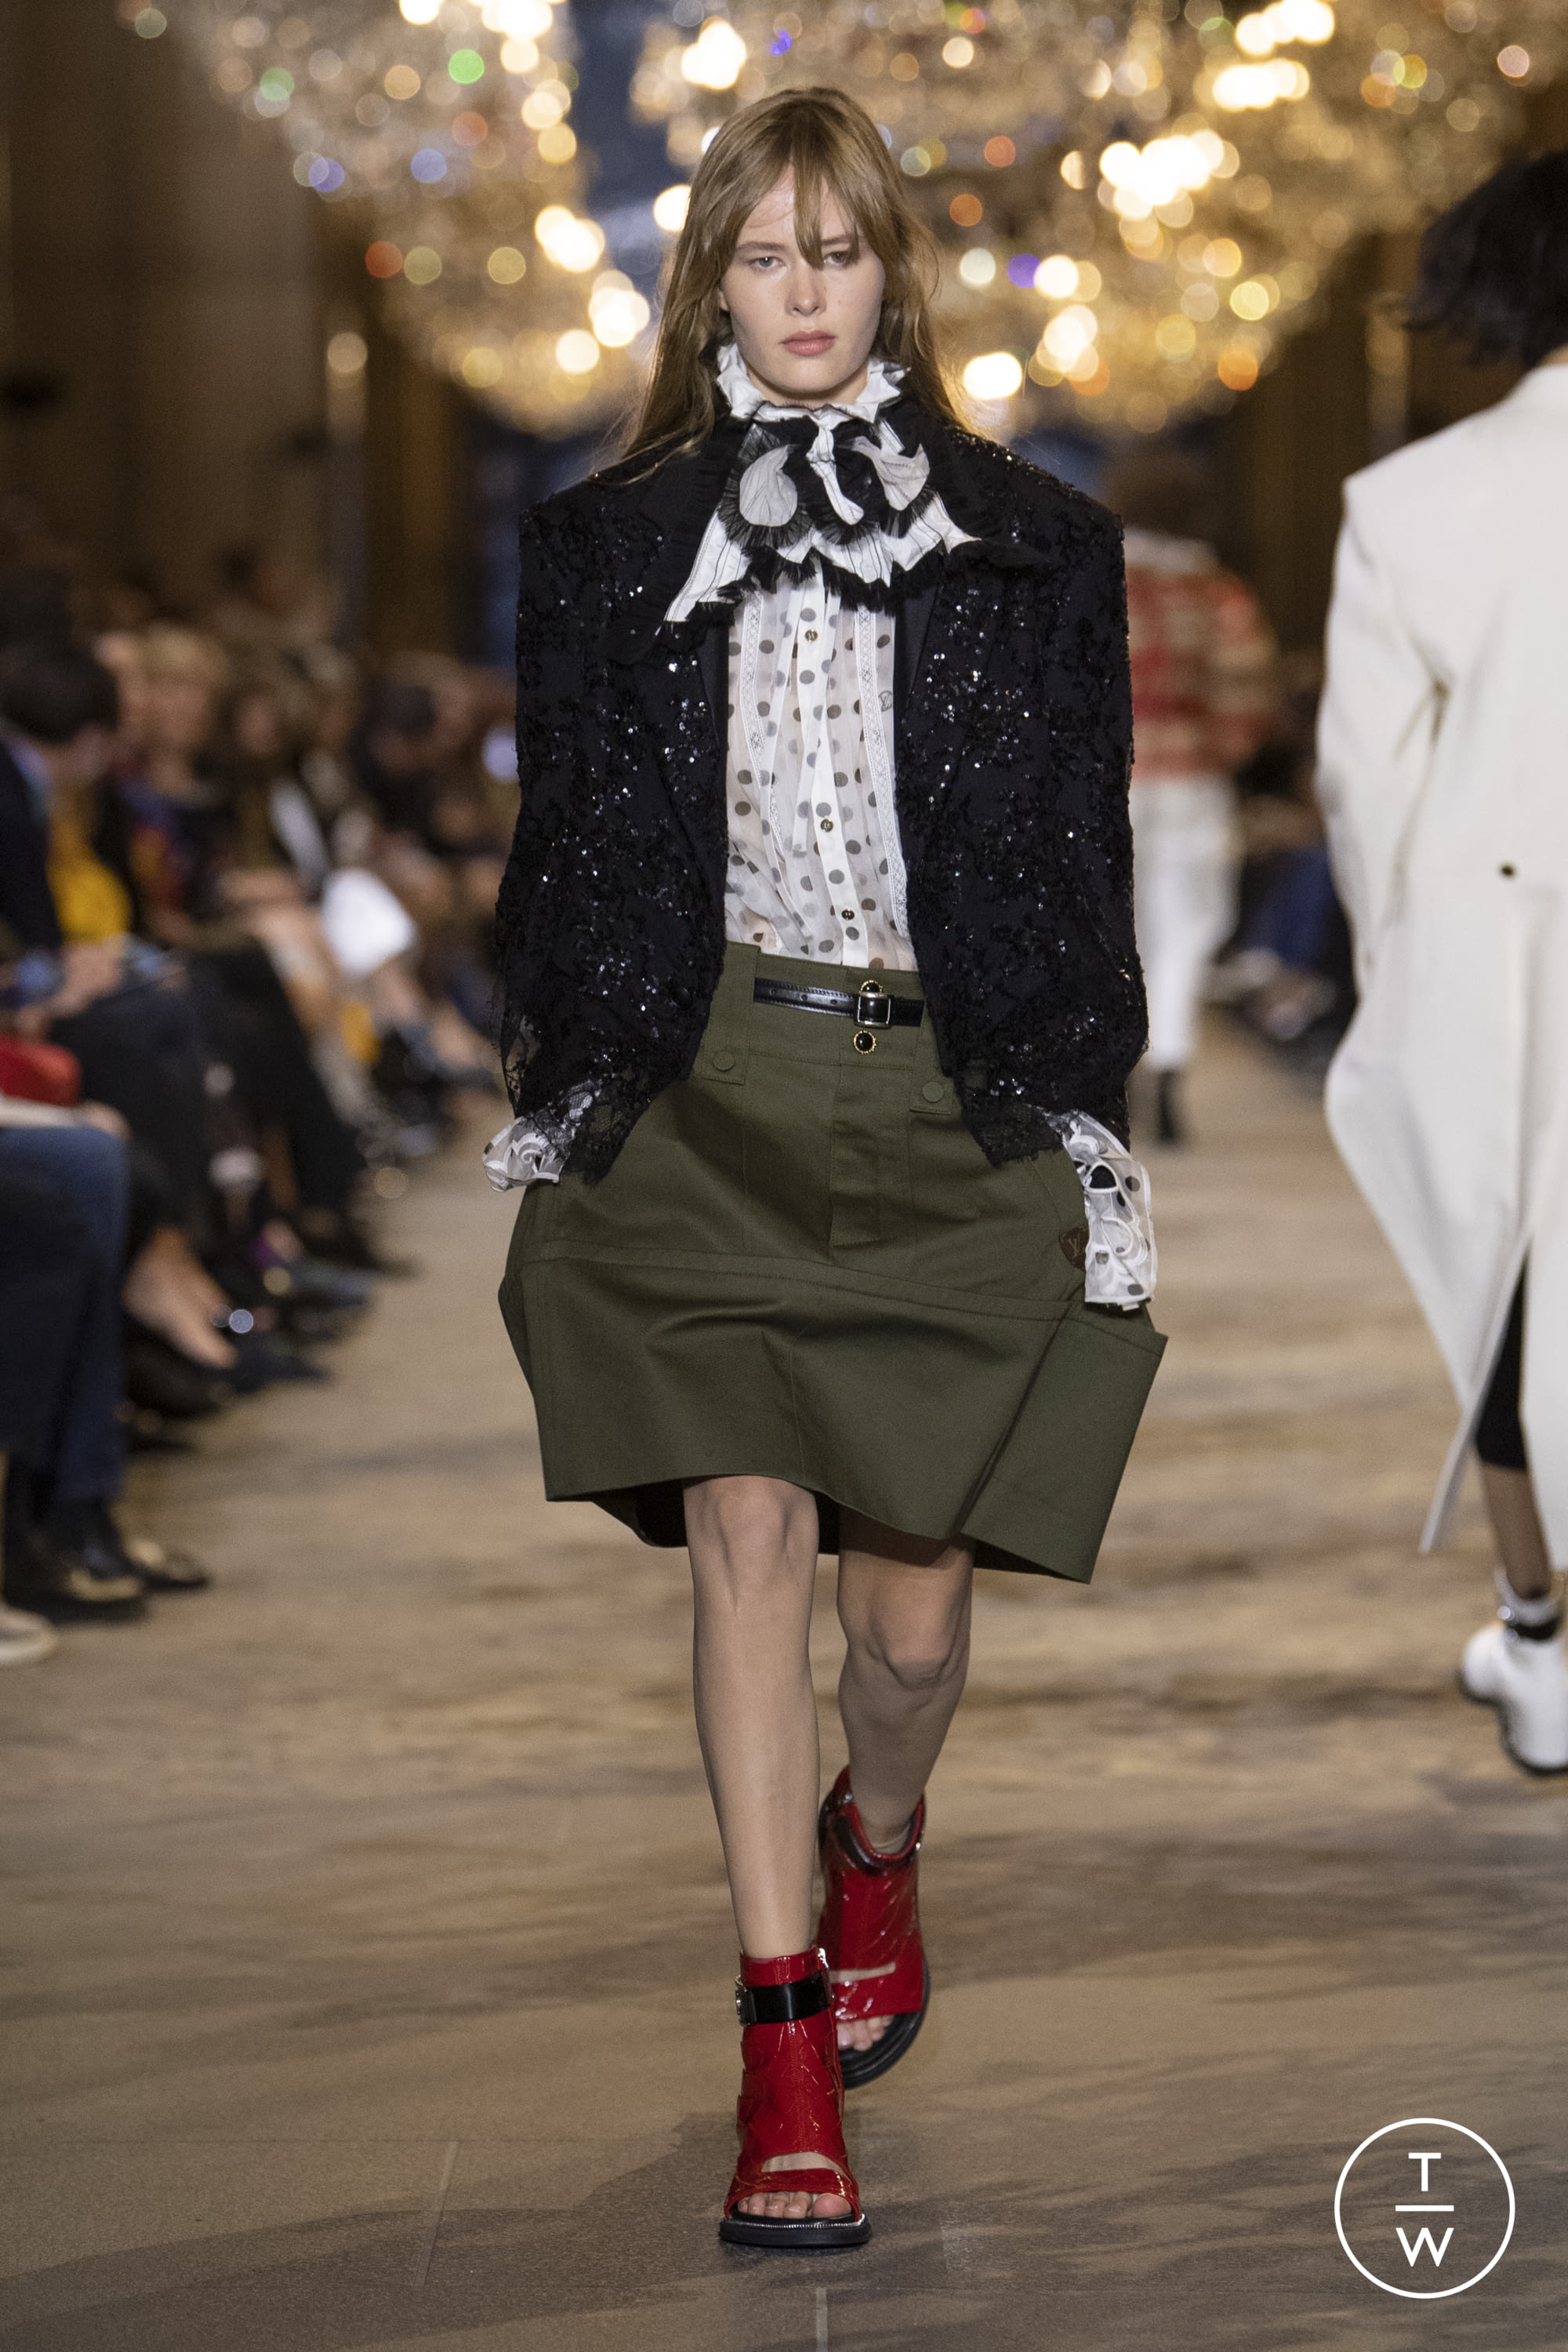 Louis Vuitton RE22 womenswear #41 - Tagwalk: The Fashion Search Engine